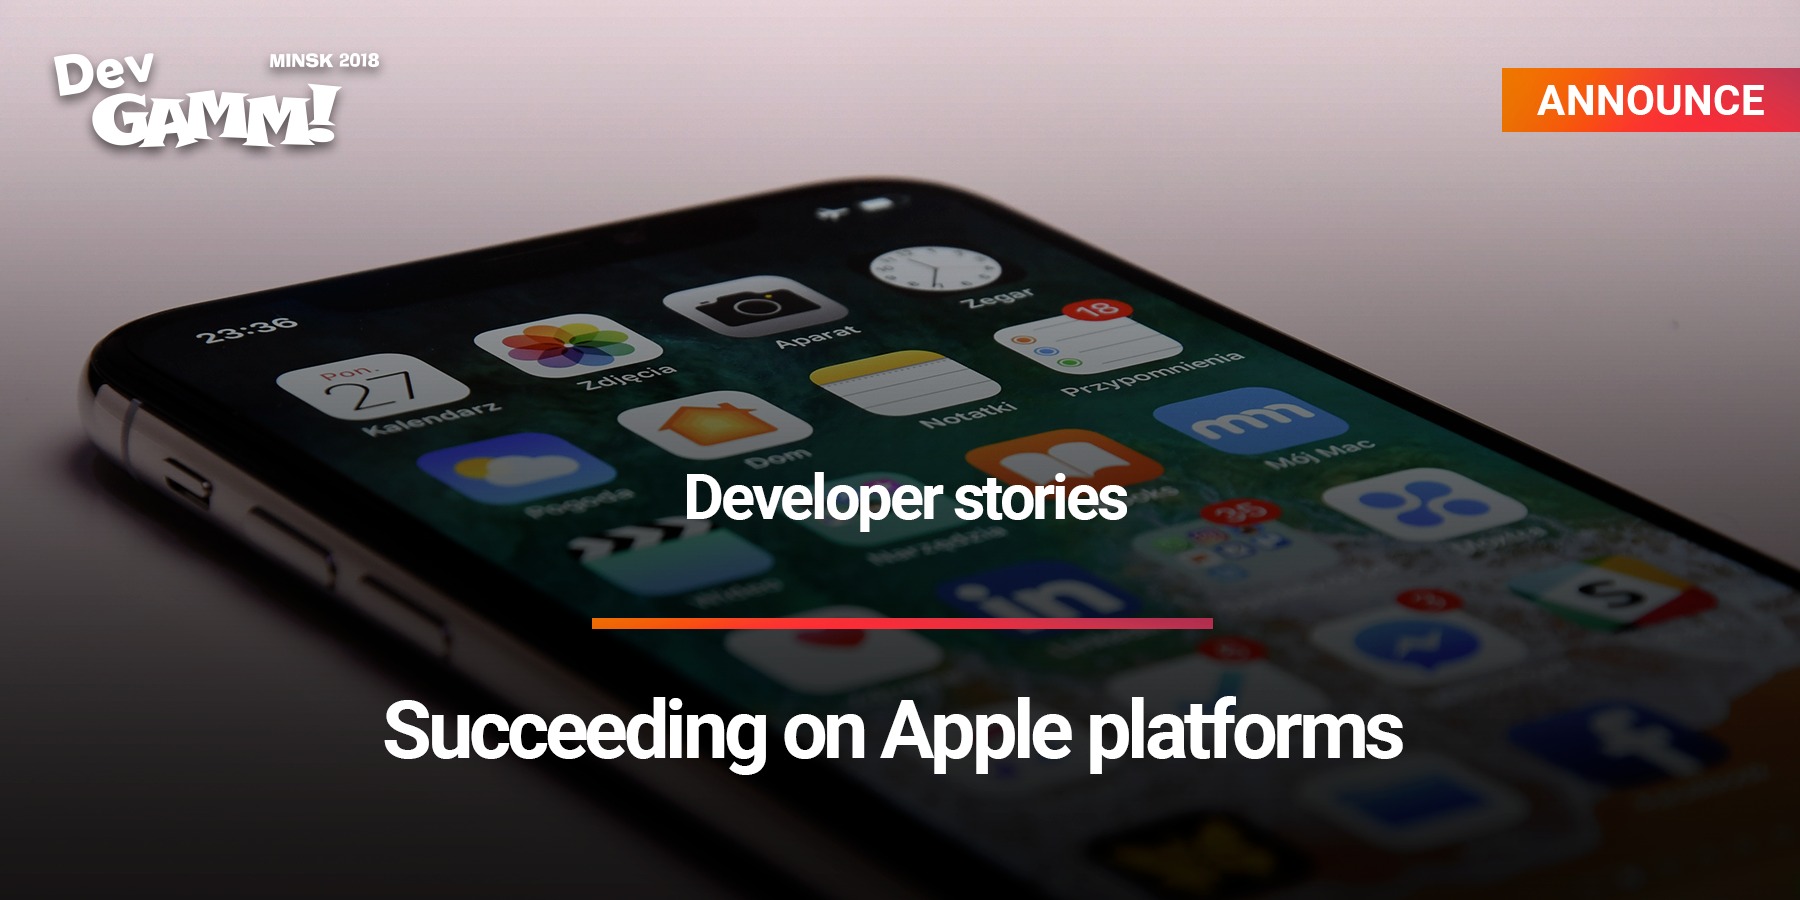 Succeeding on Apple platforms: developer stories